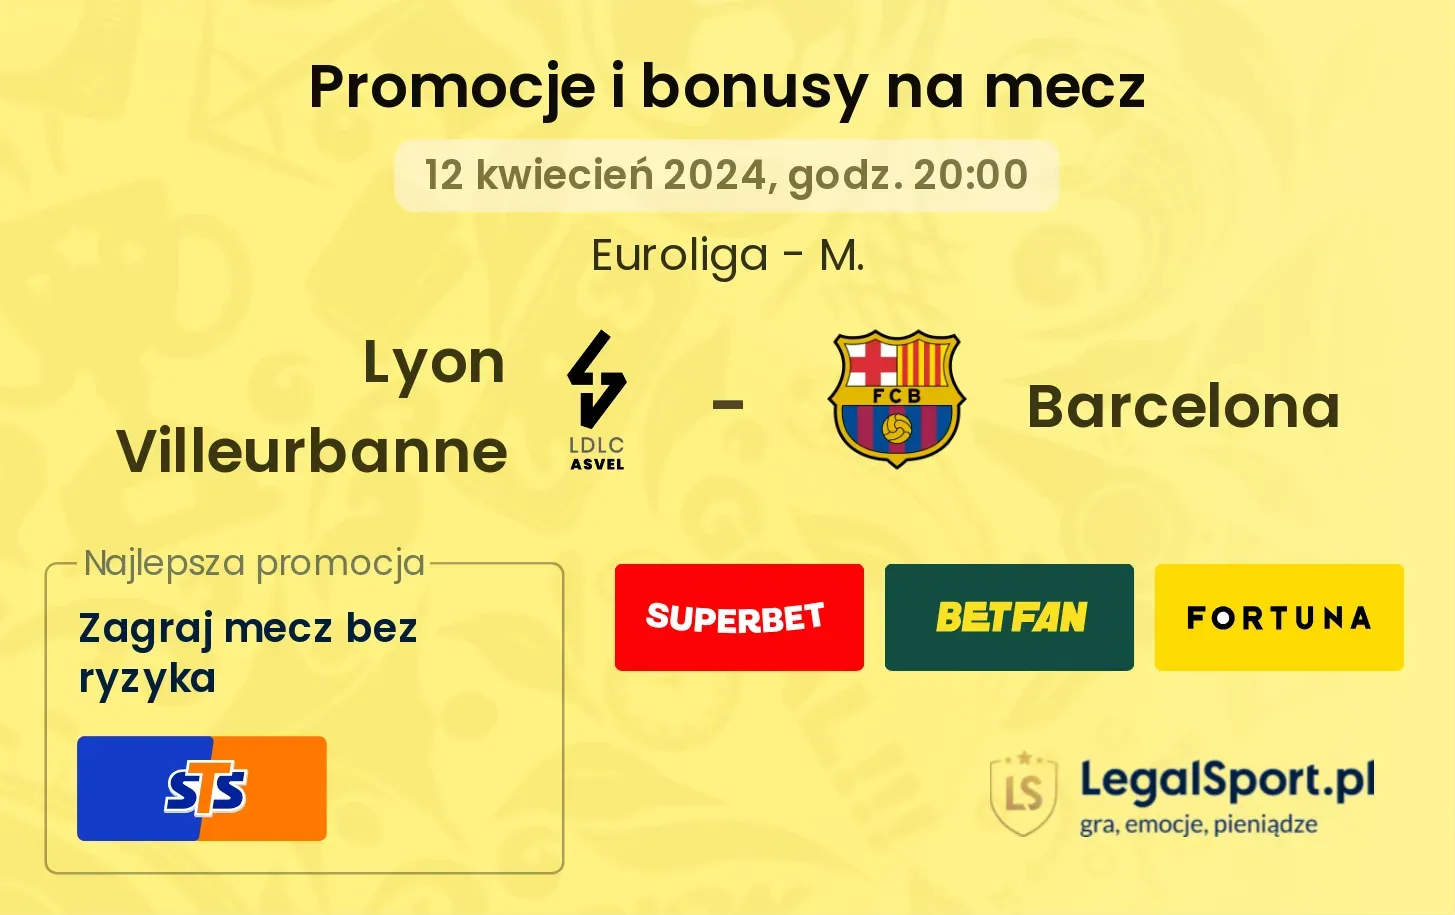 Lyon Villeurbanne - Barcelona promocje bonusy na mecz